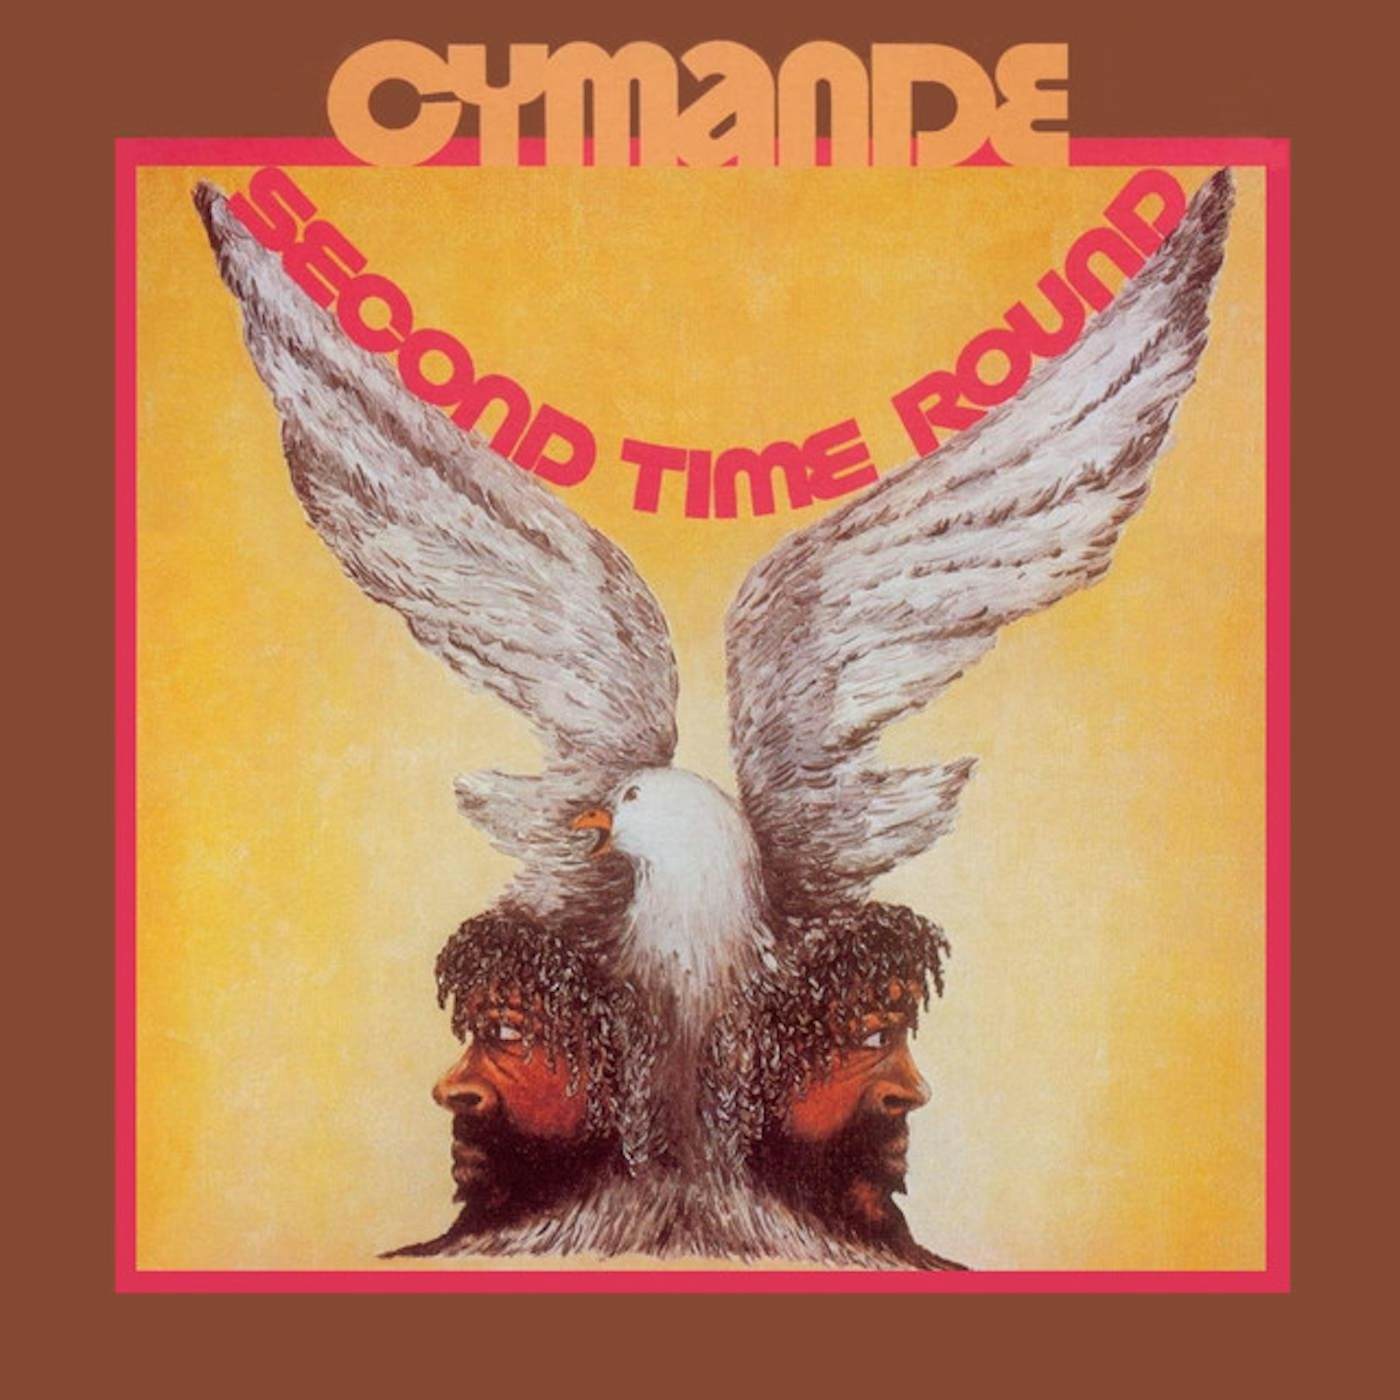 Cymande SECOND TIME AROUND Vinyl Record